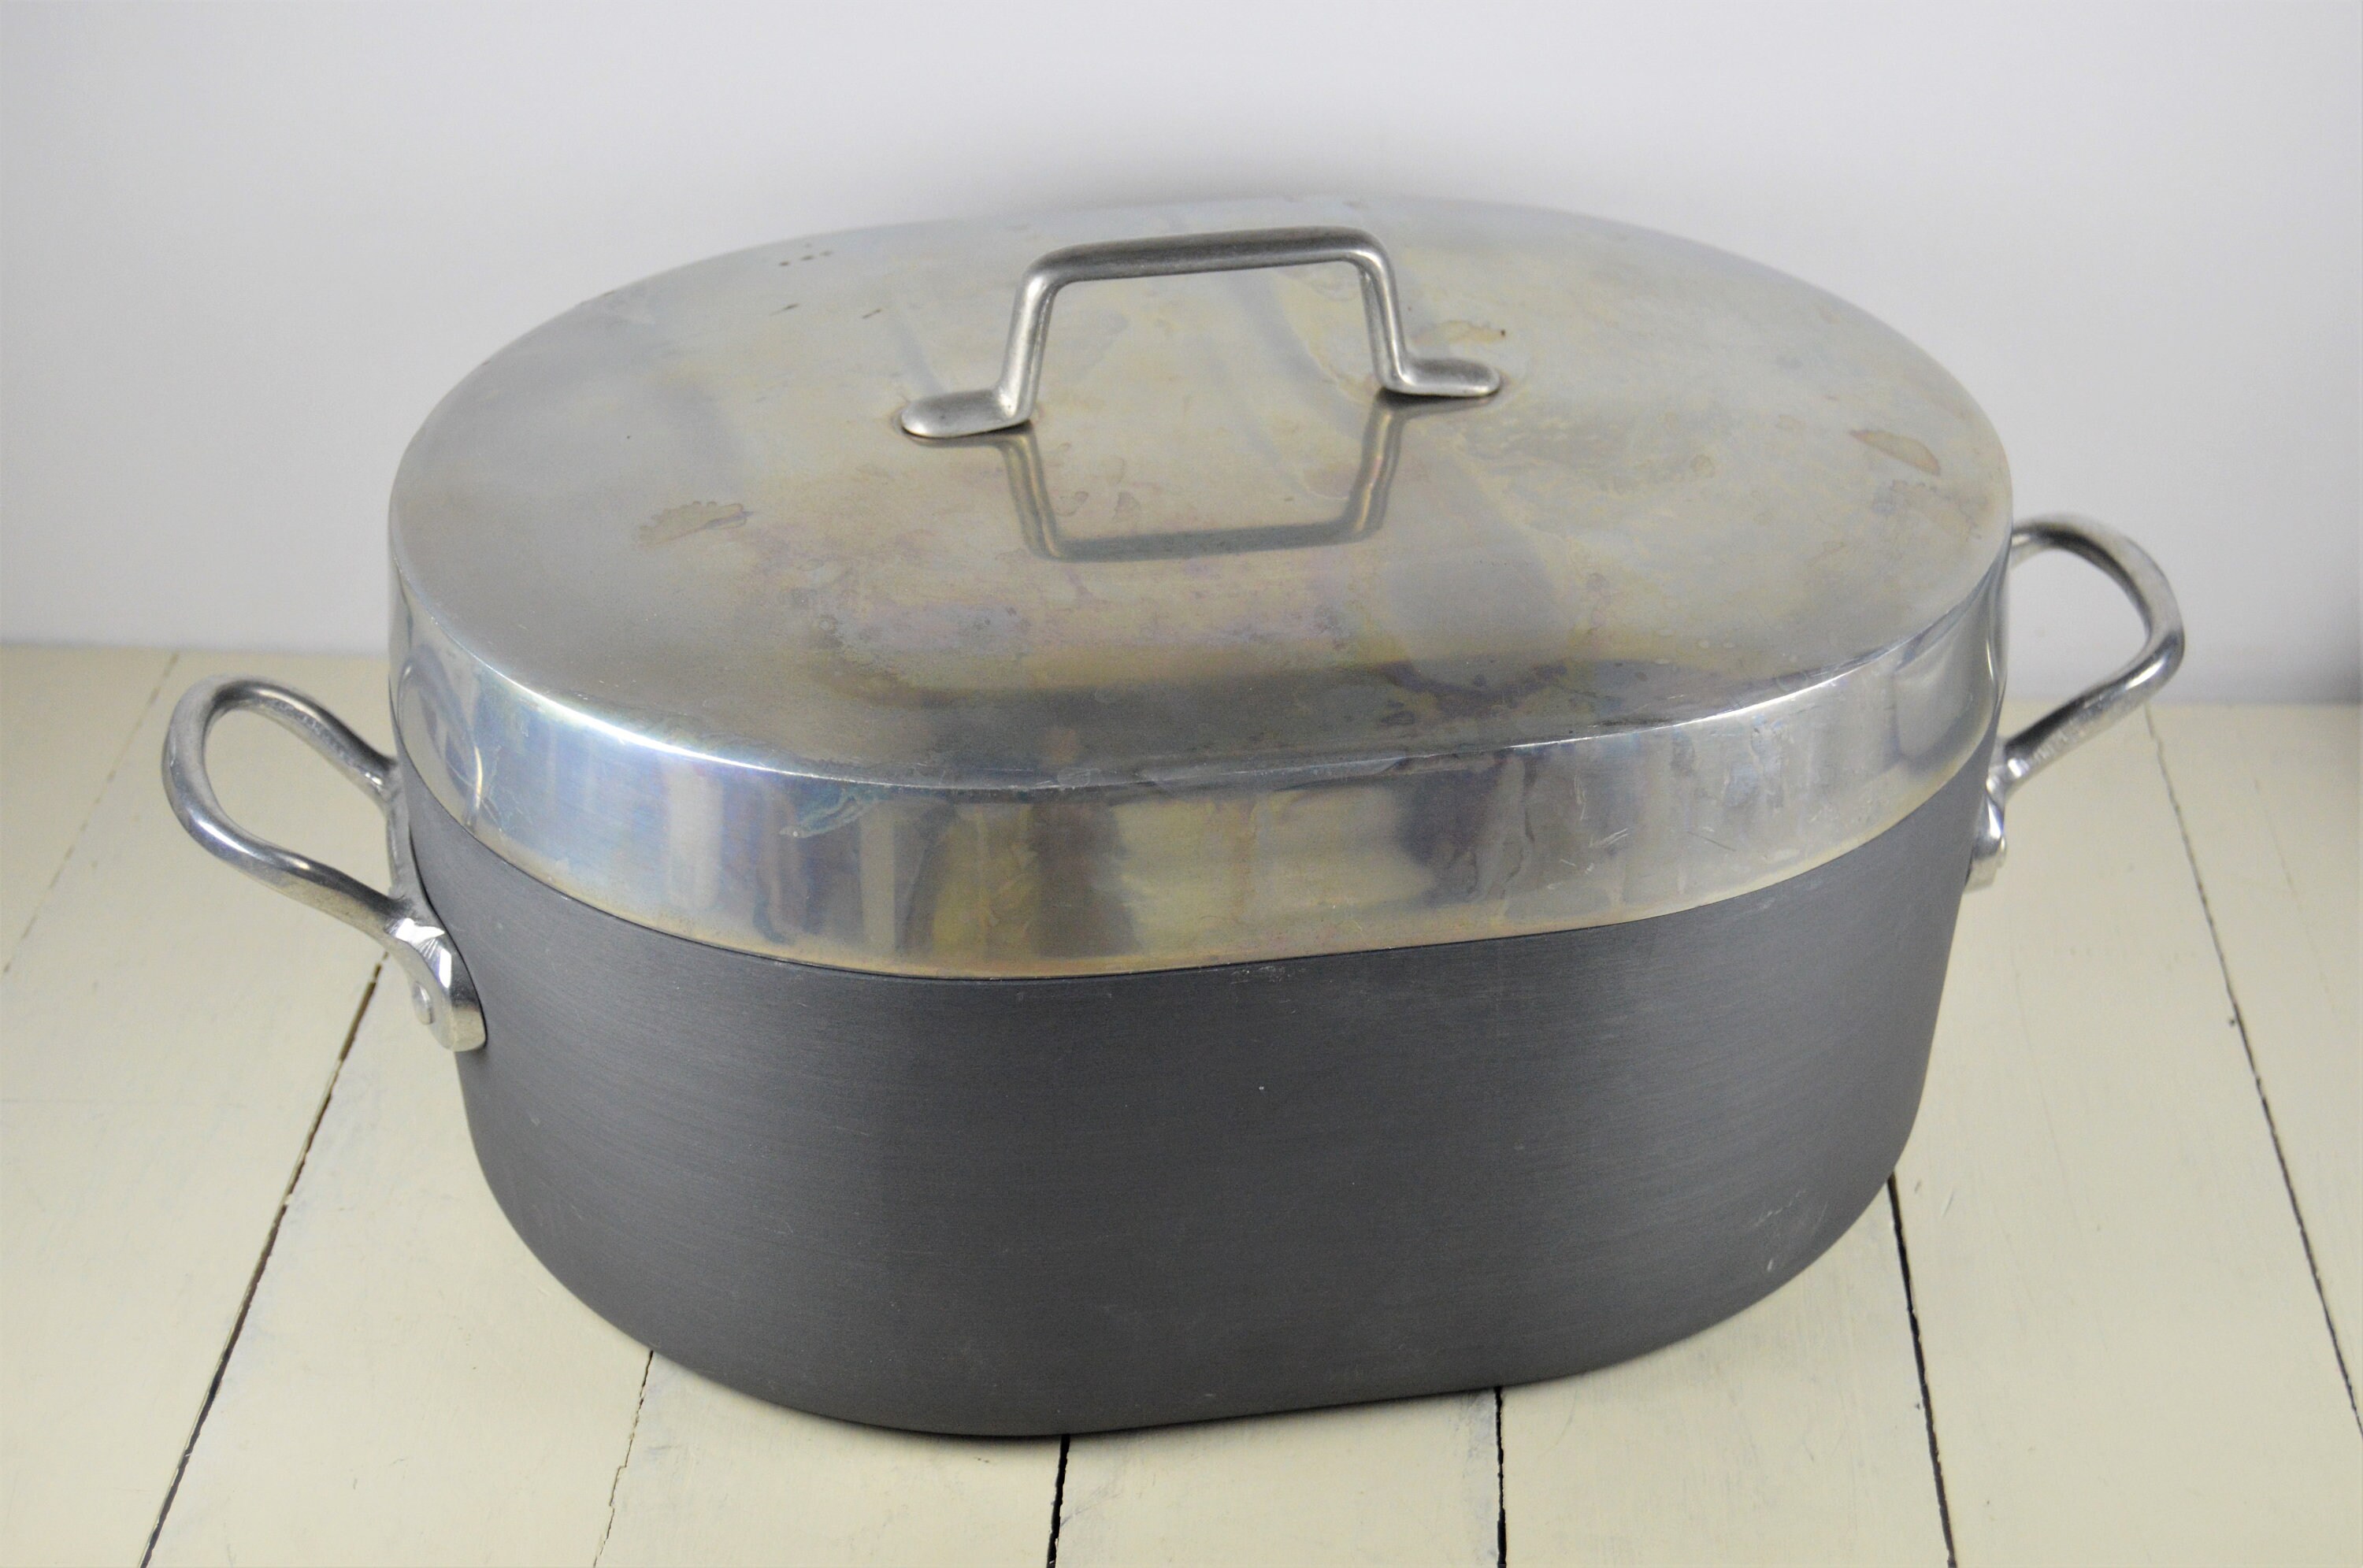 Magnalite Professional GHC 2 Quart Anodized Aluminum Saucepan Pot with Lid